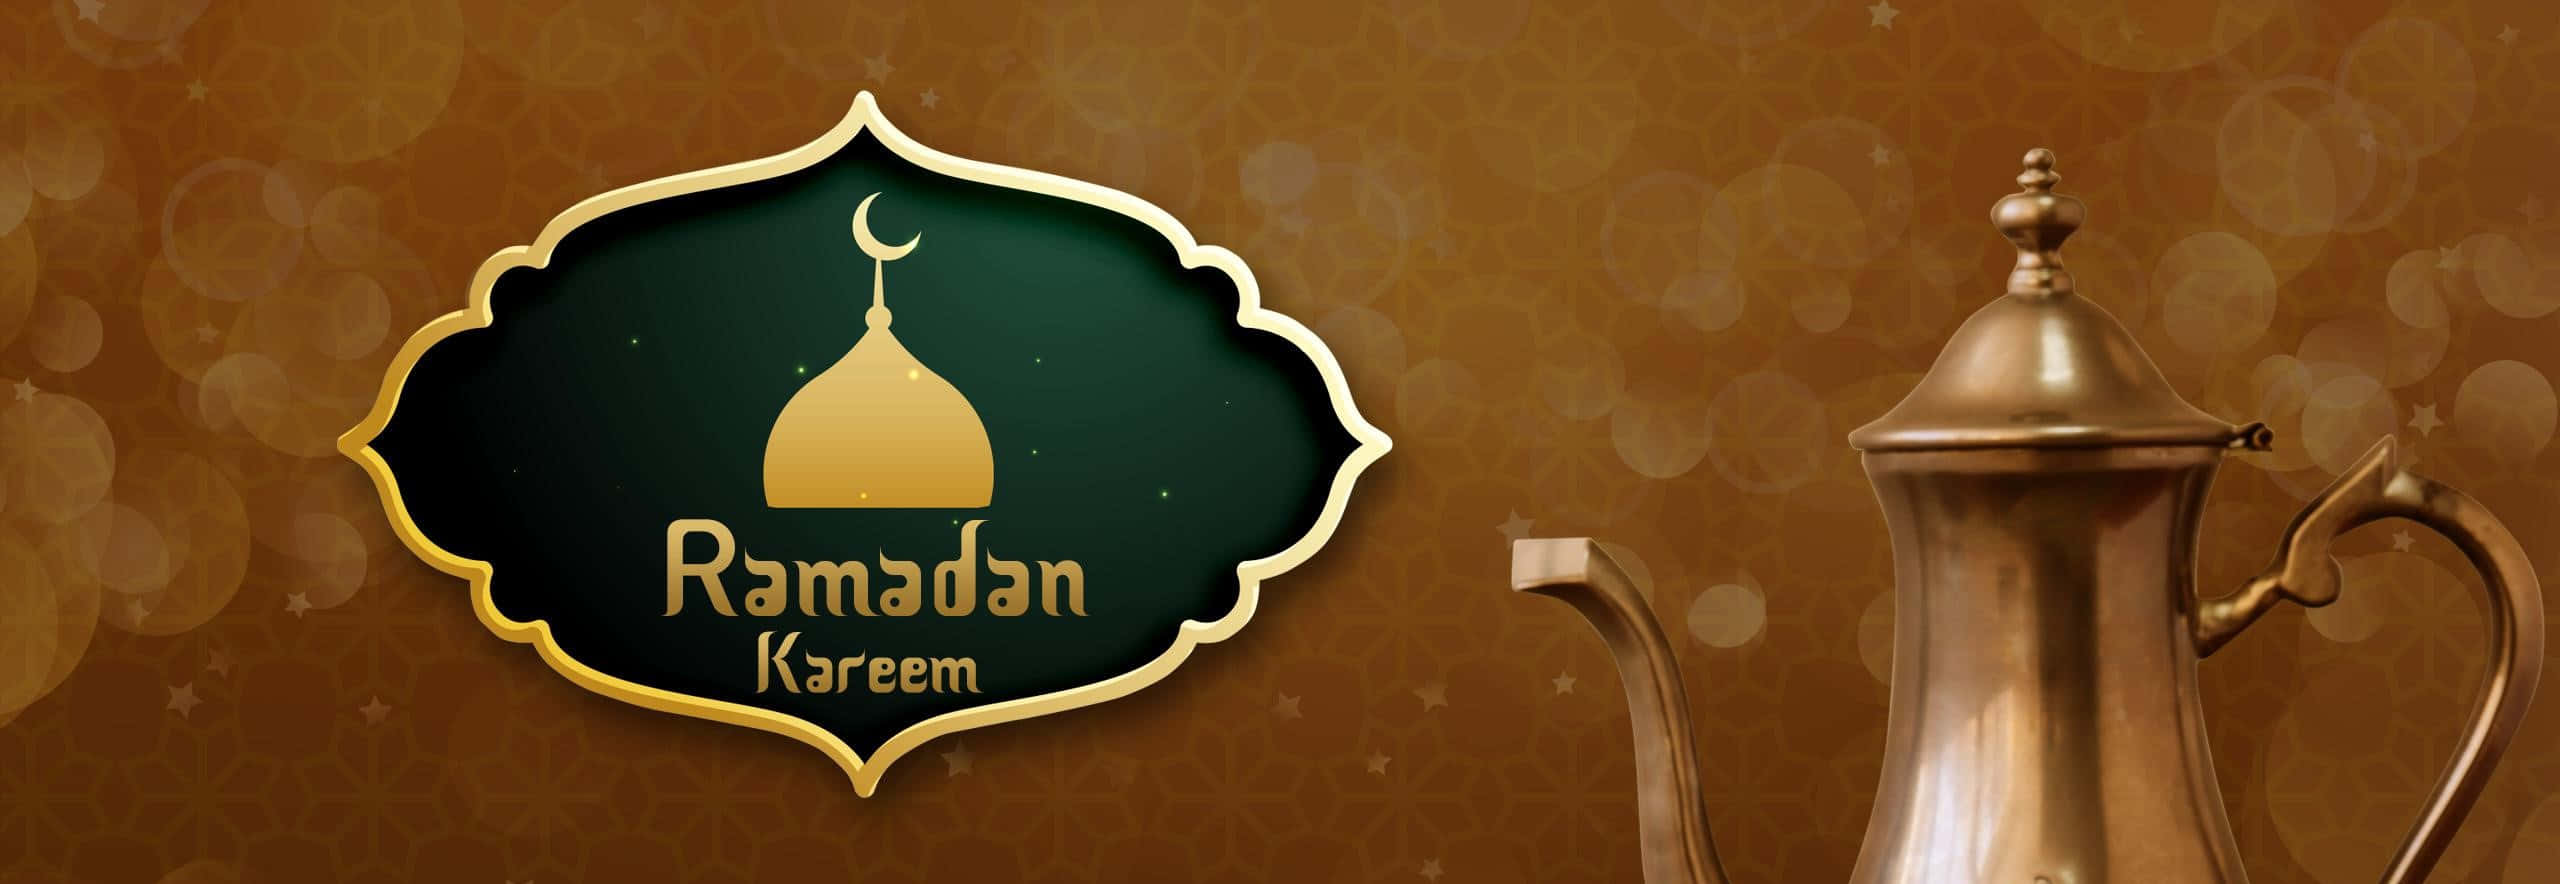 Imagende Ramadan Kareem